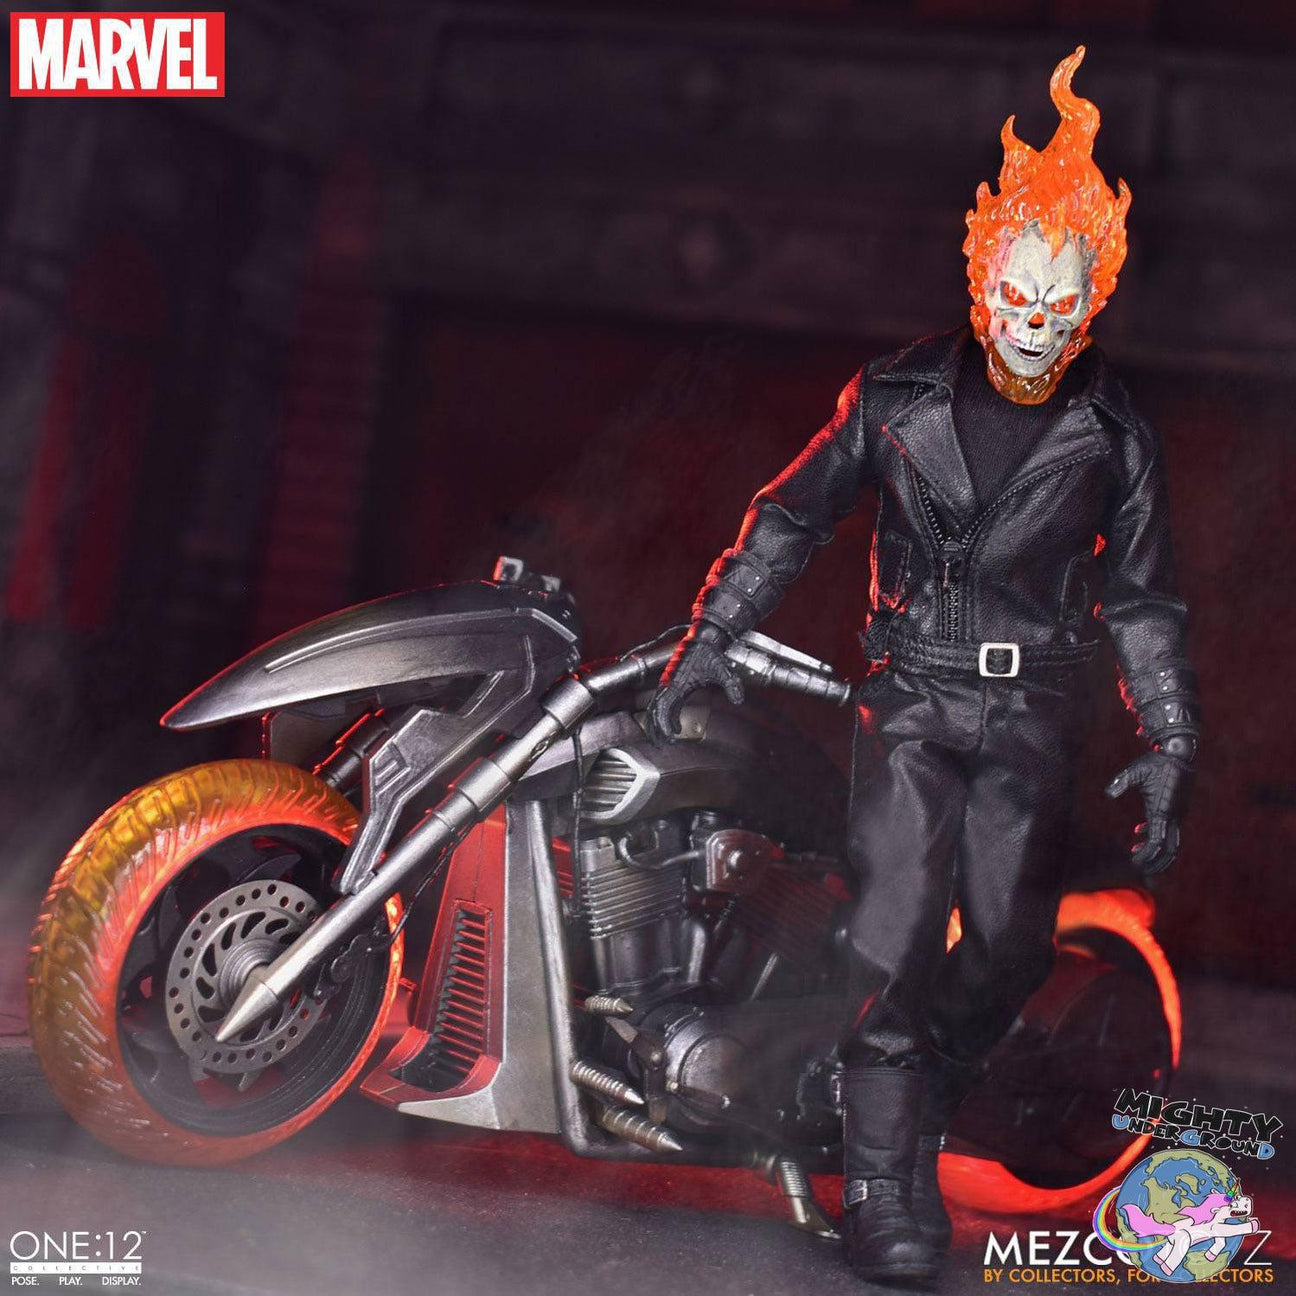 Marvel Universe: Ghost Rider & Hell Cycle - 1:12 VORBESTELLUNG!-Actionfiguren-Mezco Toys-Mighty Underground